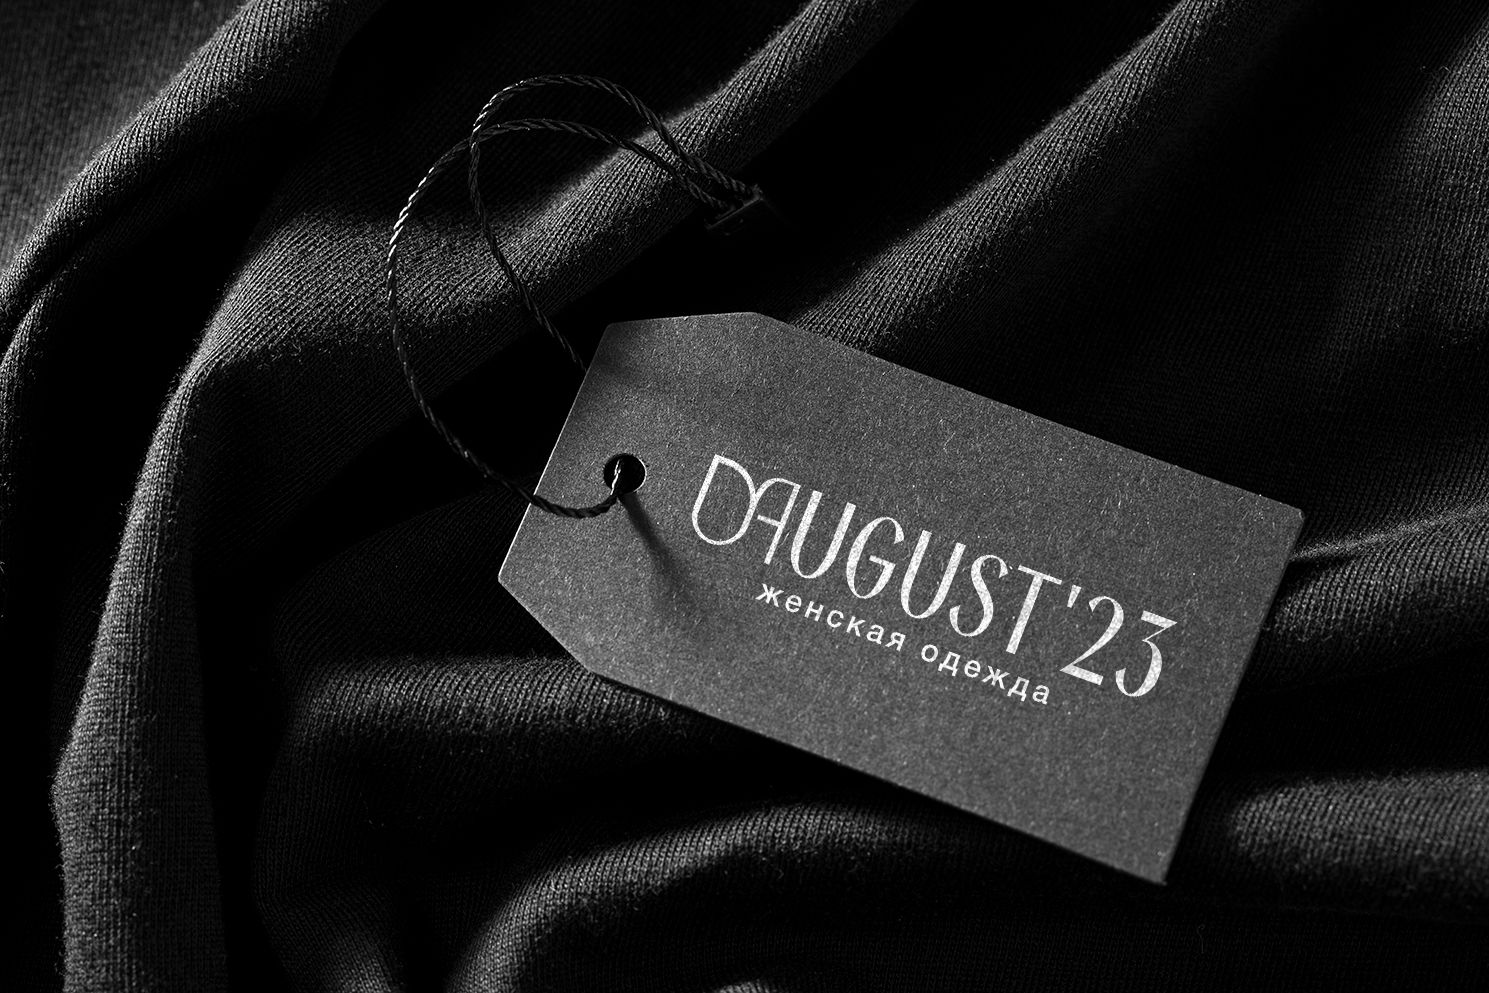 Логотип для AUGUST'23 - дизайнер musickscyl